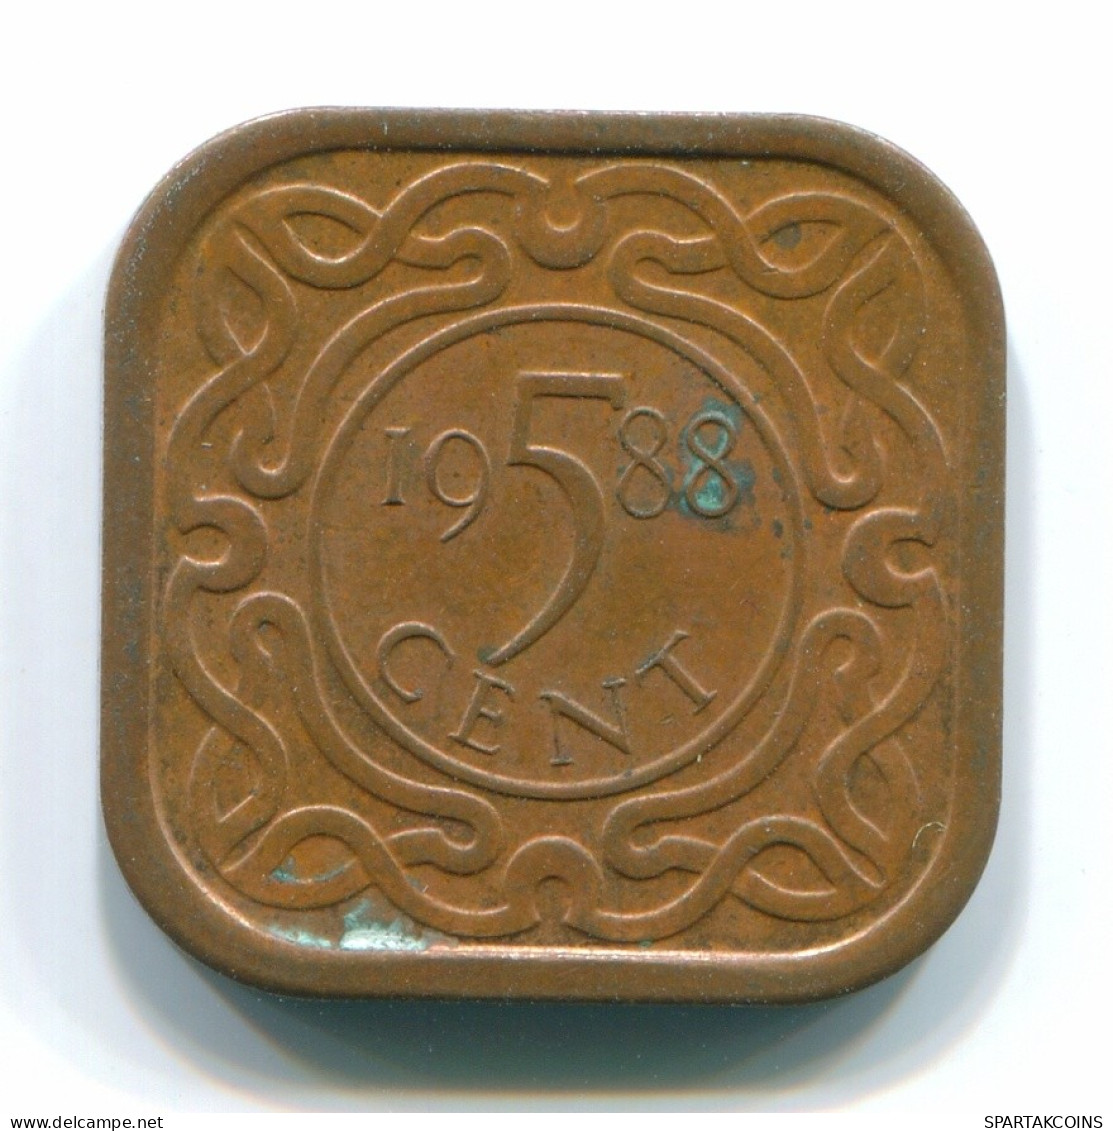 5 CENTS 1988 SURINAME Copper Plated Steel Coin #S13063.U.A - Surinam 1975 - ...